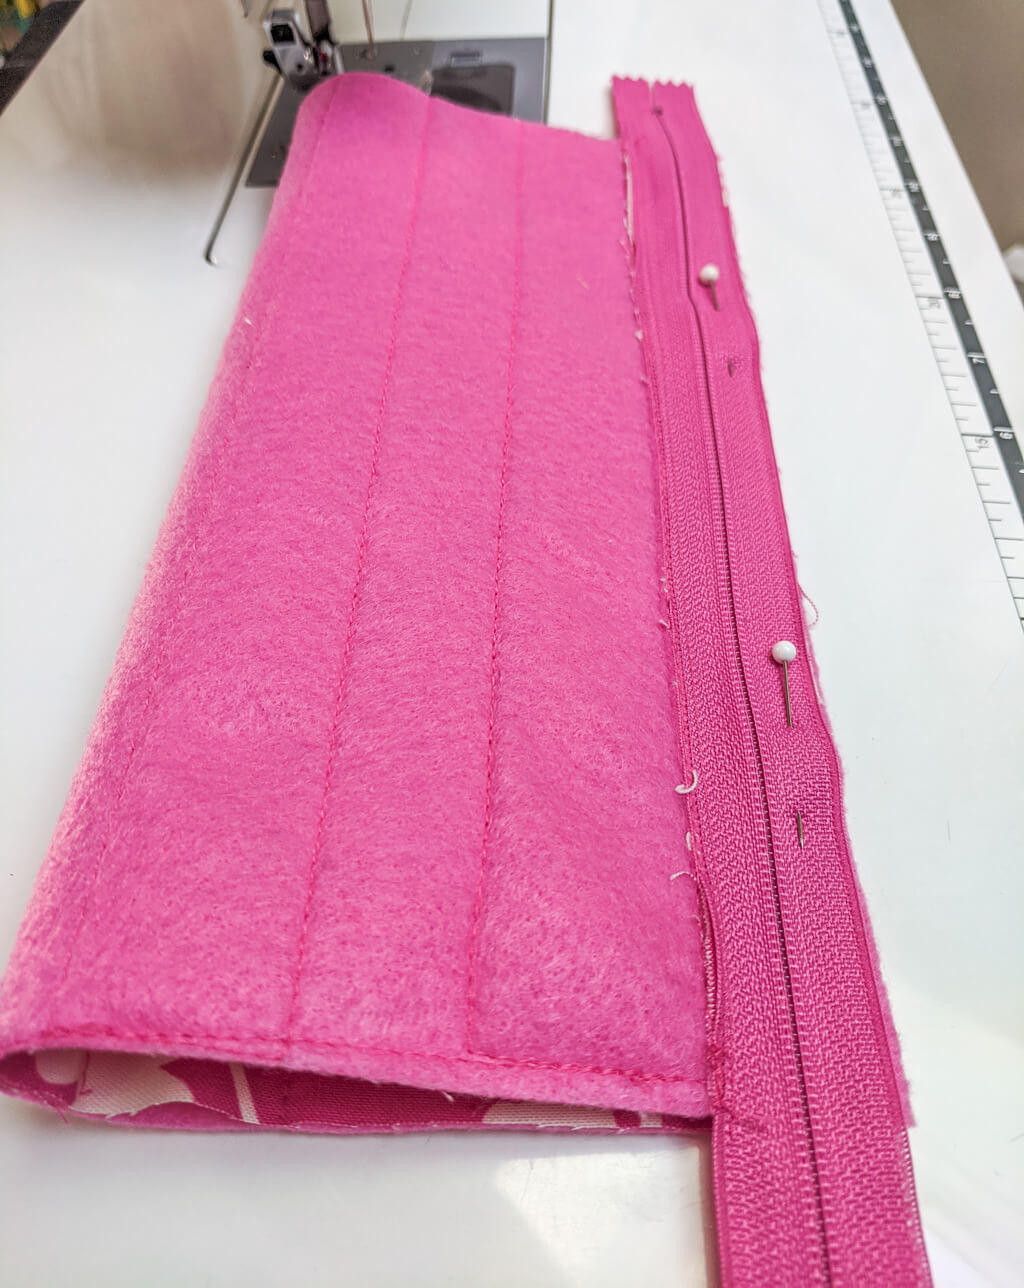 Sewing a zipper into a pencil case pouch